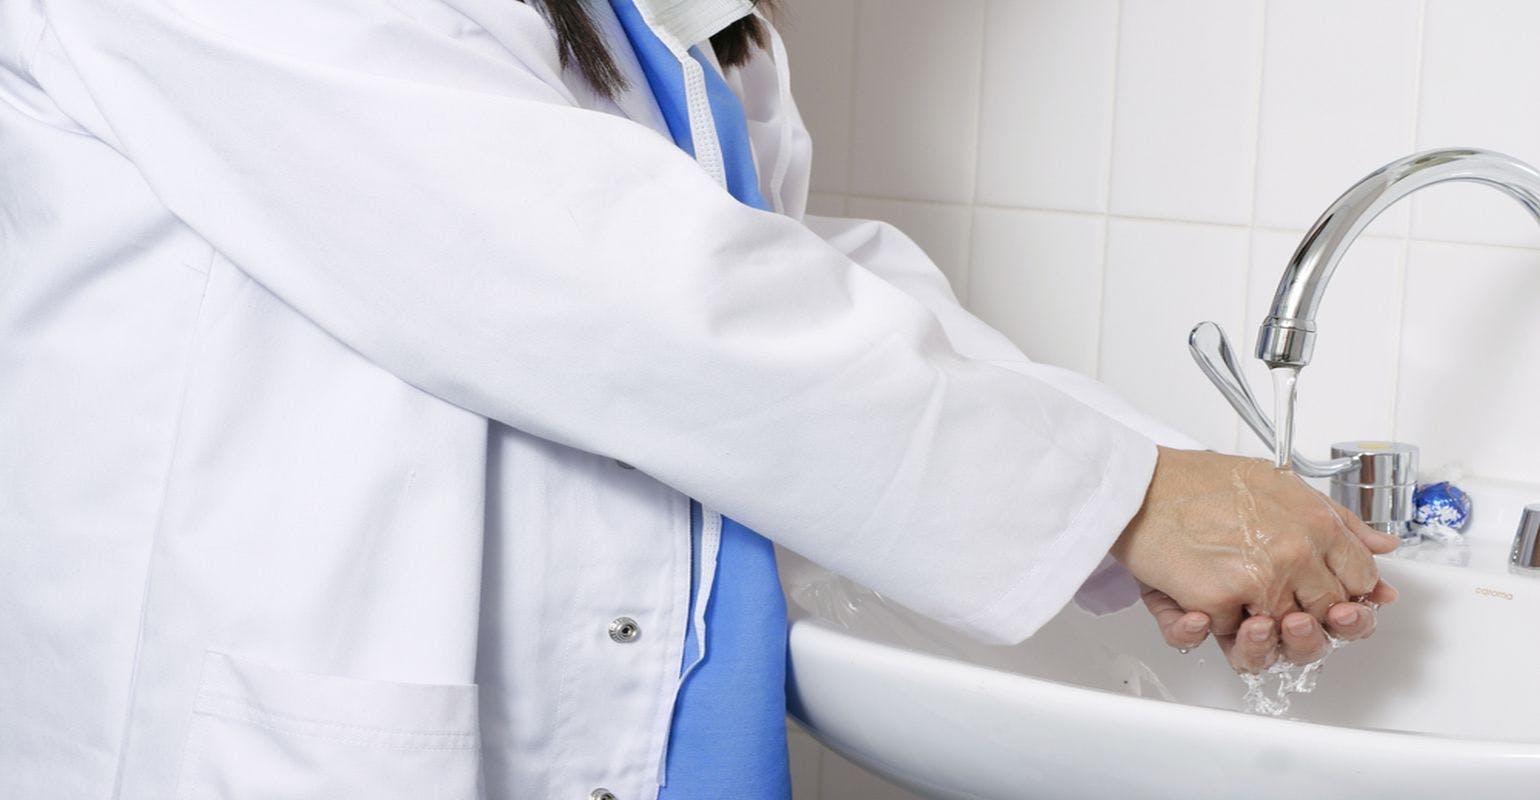 Sink Traps are Surprising Source of Antibiotic-Resistant Bacteria in ICU